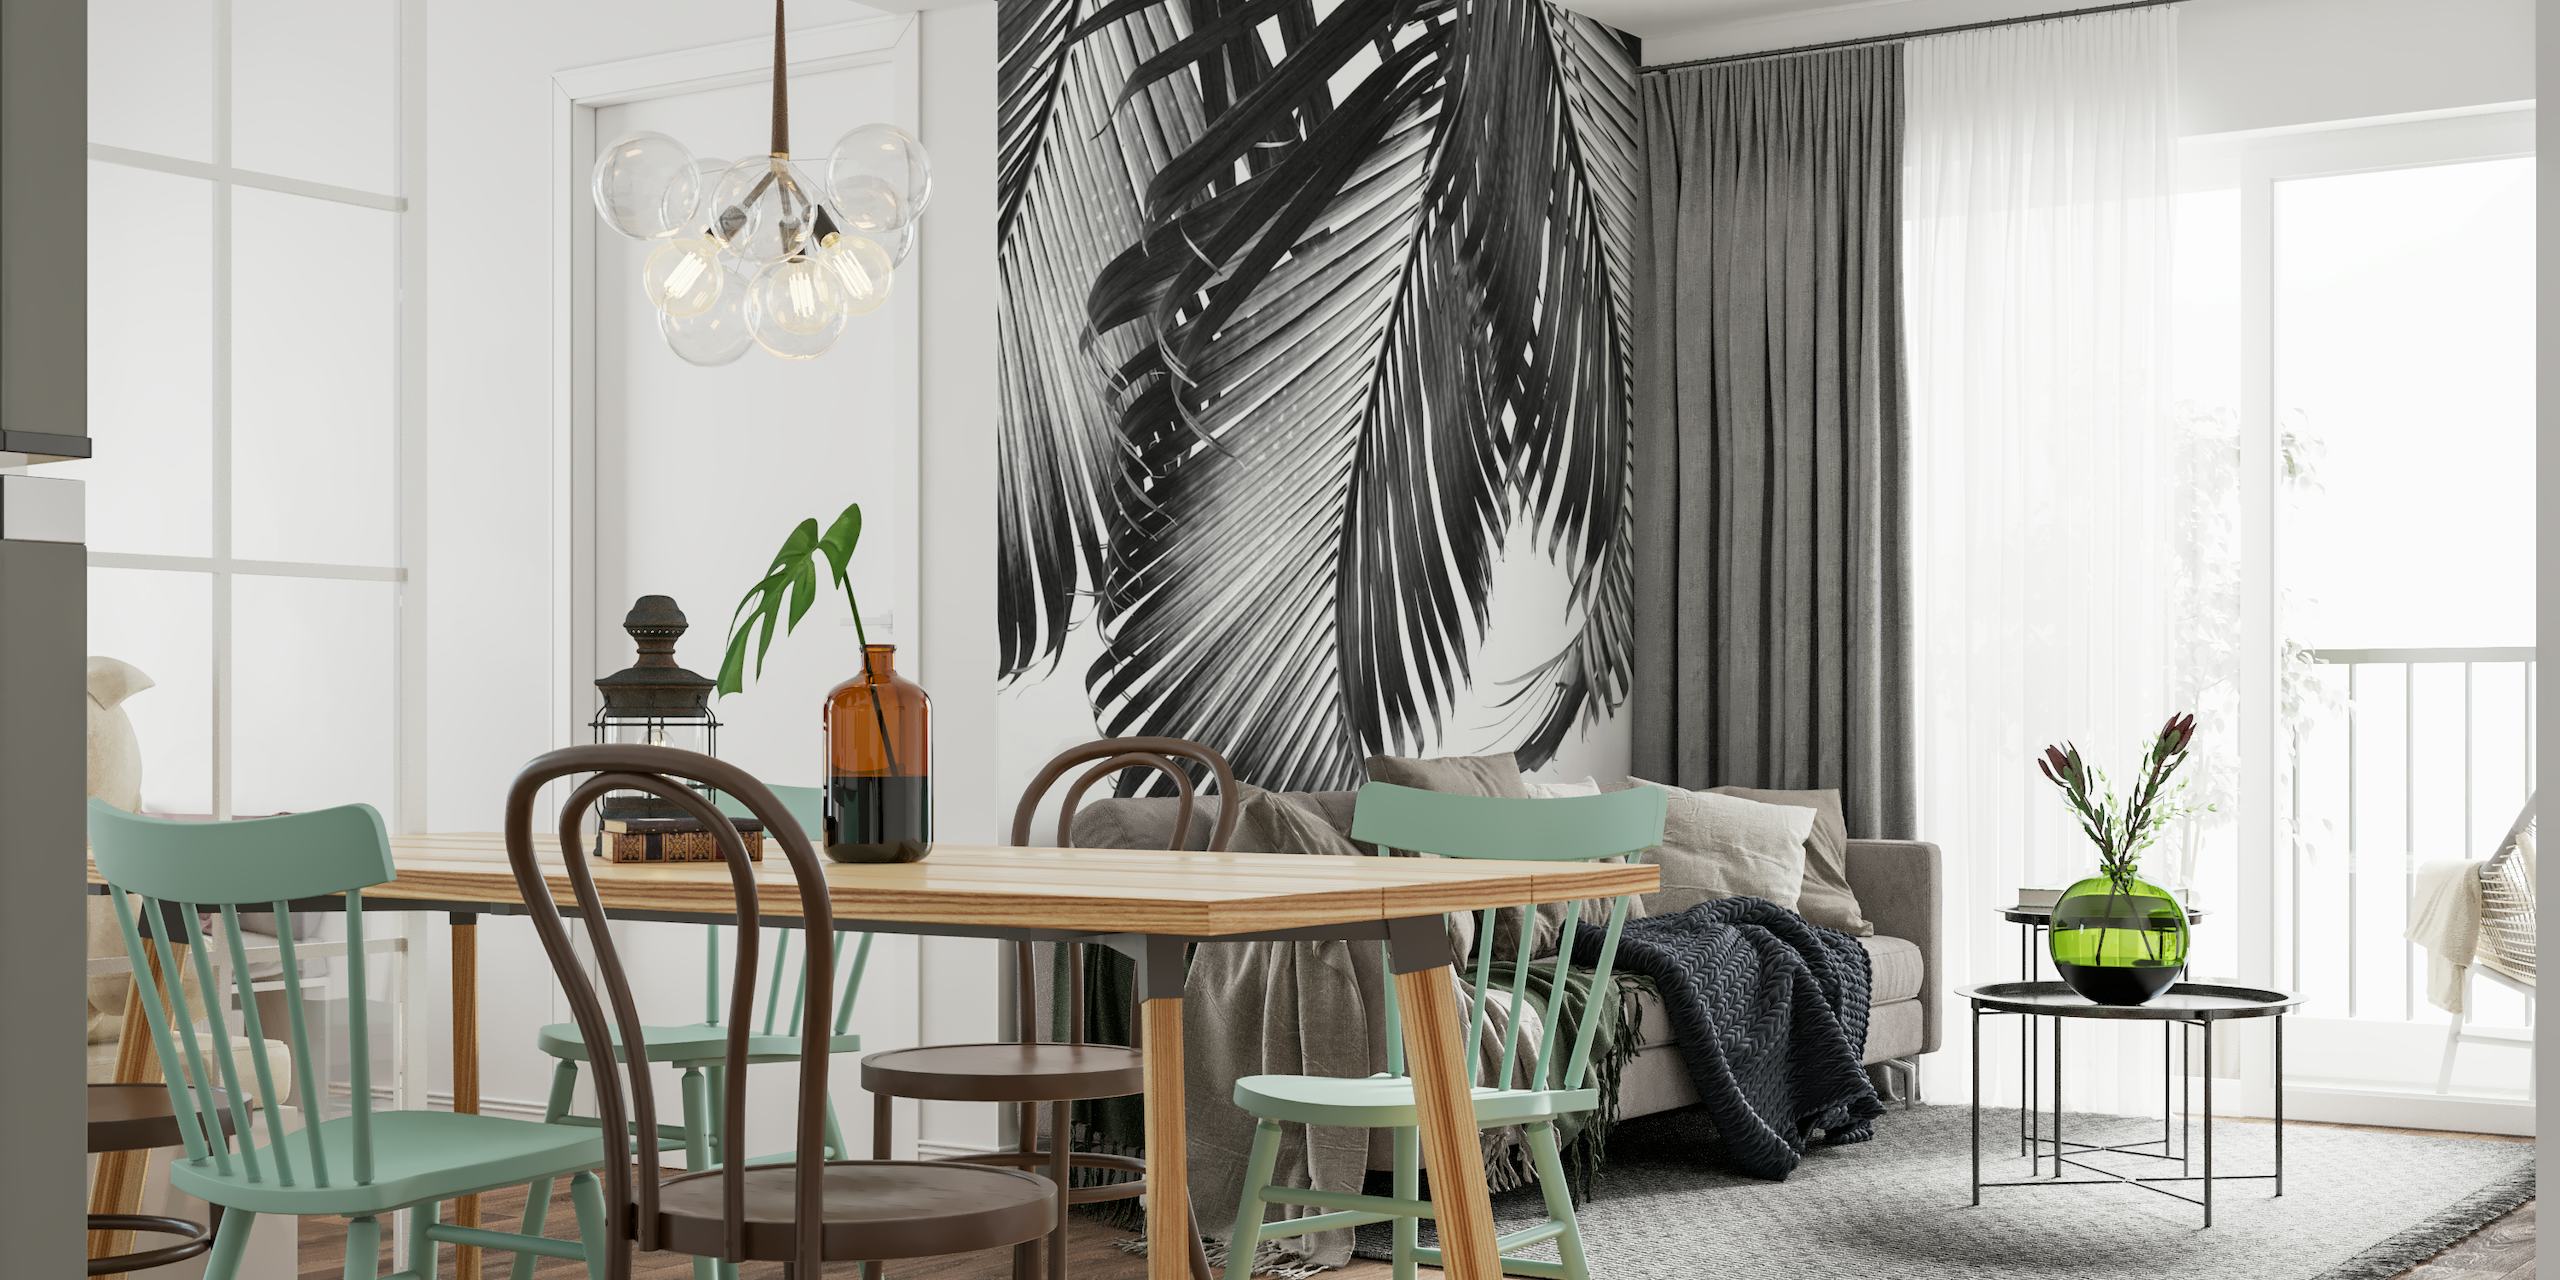 Fotomural de hojas de palma monocromáticas para decoración de interiores